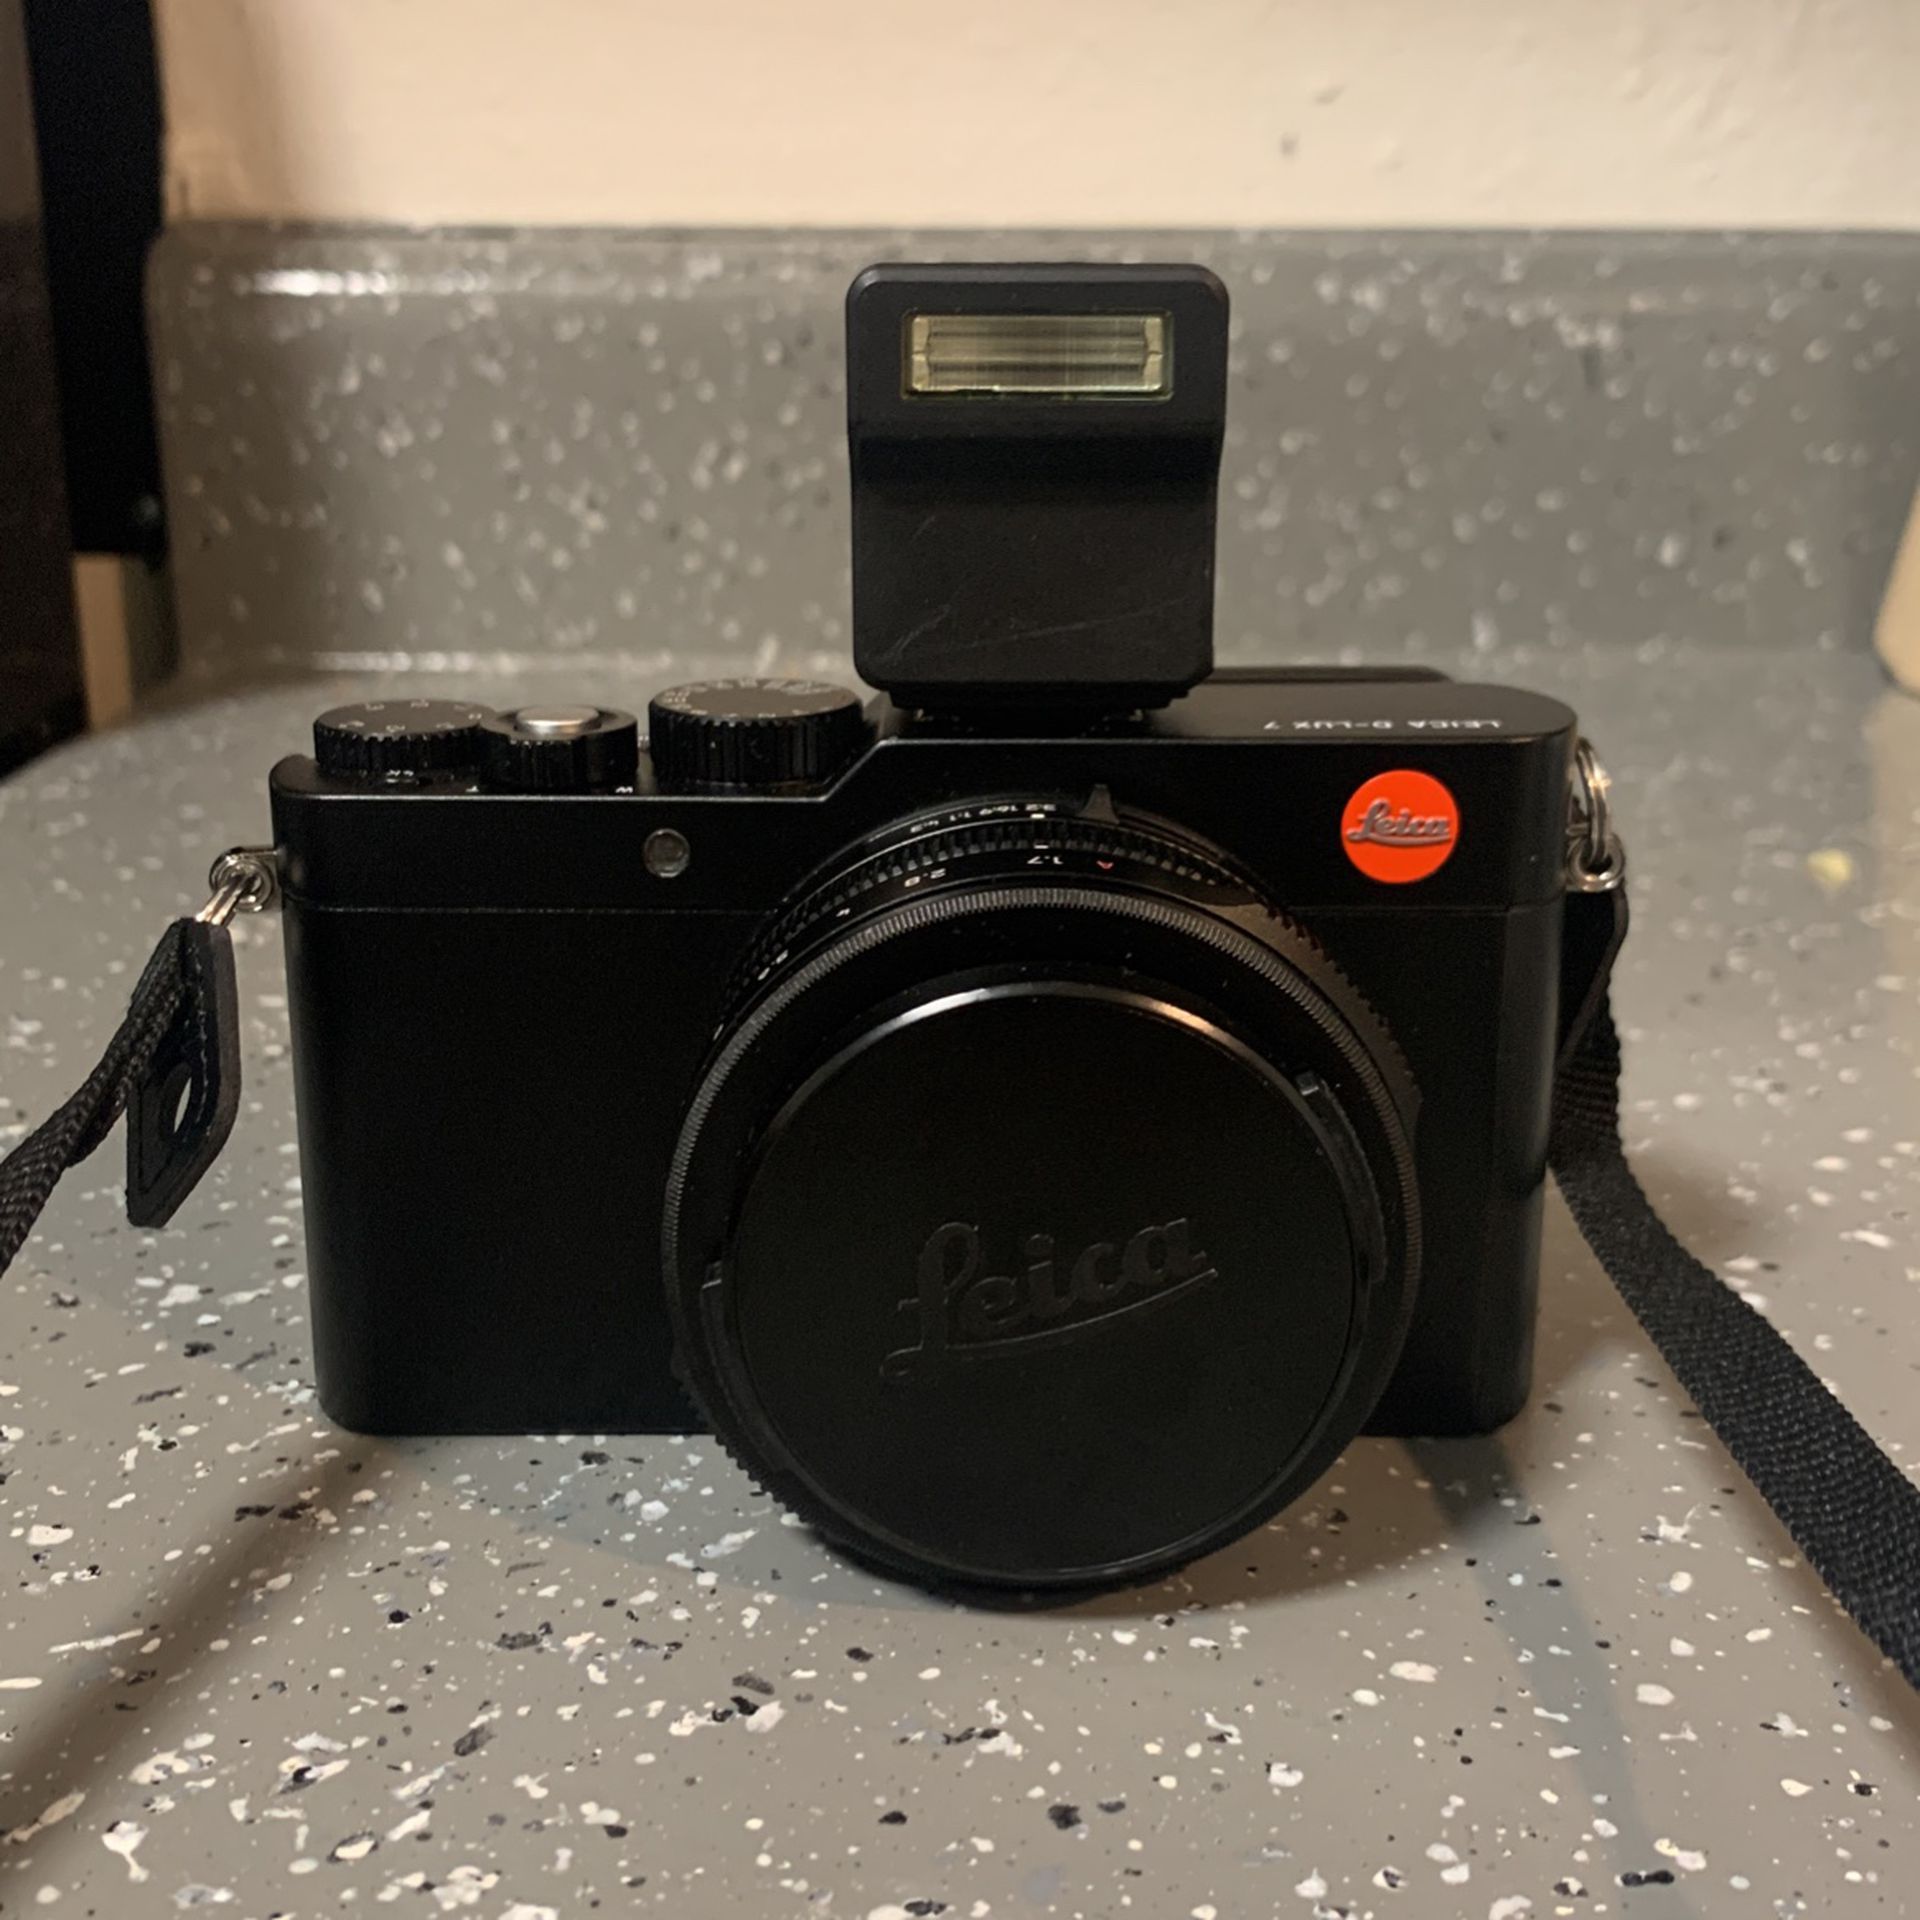 Leica D-Lux 7, Black. Scroll wheel beside LCD screen is glitchy